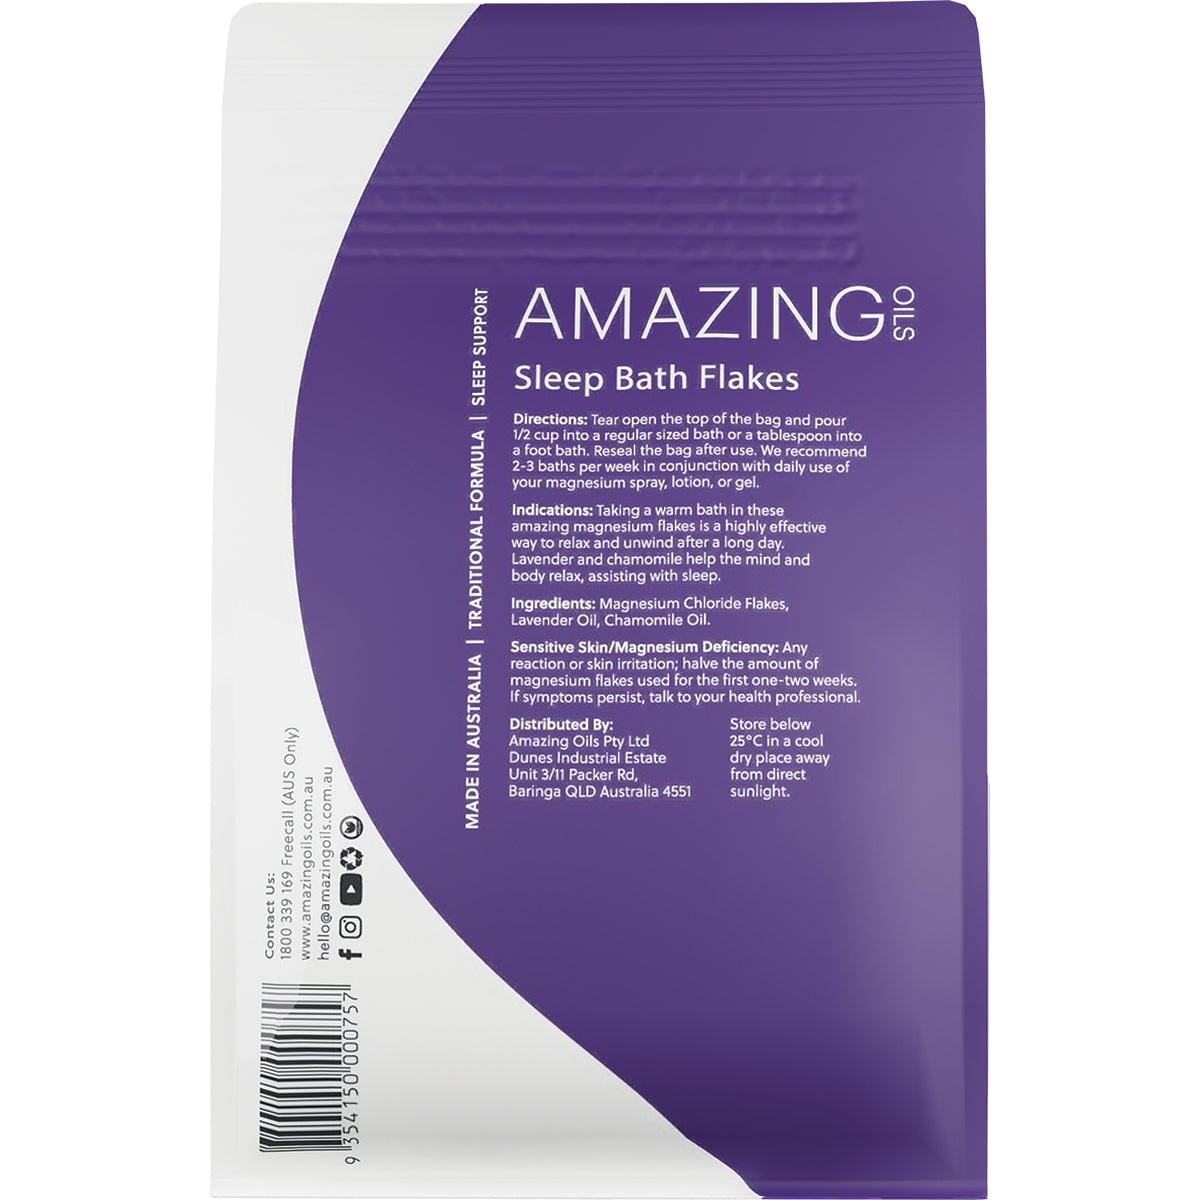 Amazing Oils Magnesium Sleep Bath Flakes Lavender & Chamomile 800g